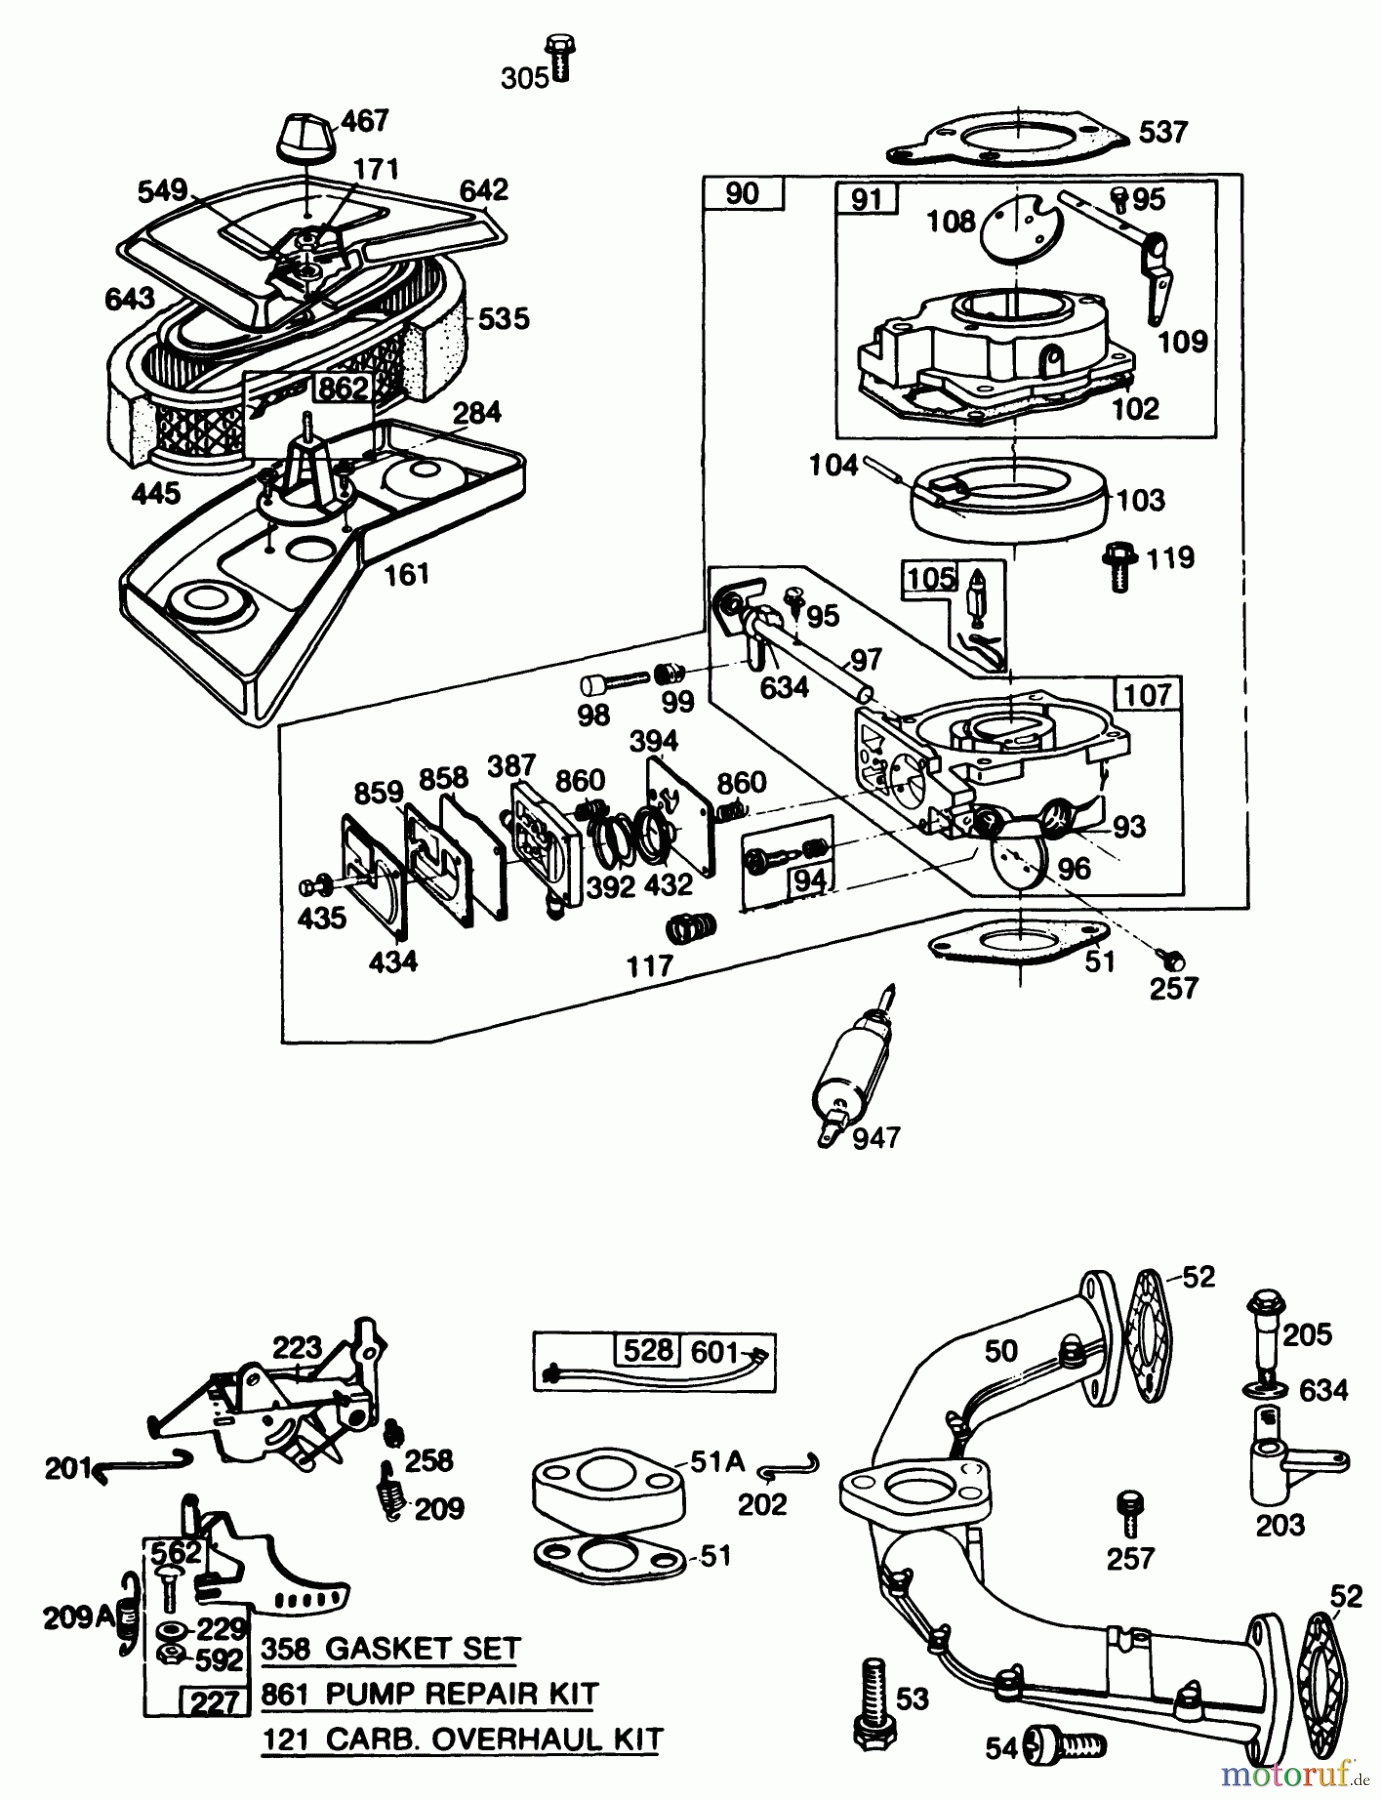  Toro Neu Mowers, Drive Unit Only 30116 - Toro Mid-Size Proline Gear Traction Unit, 16 hp, 1987 (7000001-7999999) ENGINE BRIGGS & STRATTON MODEL NO. 402707-0158-01 #2